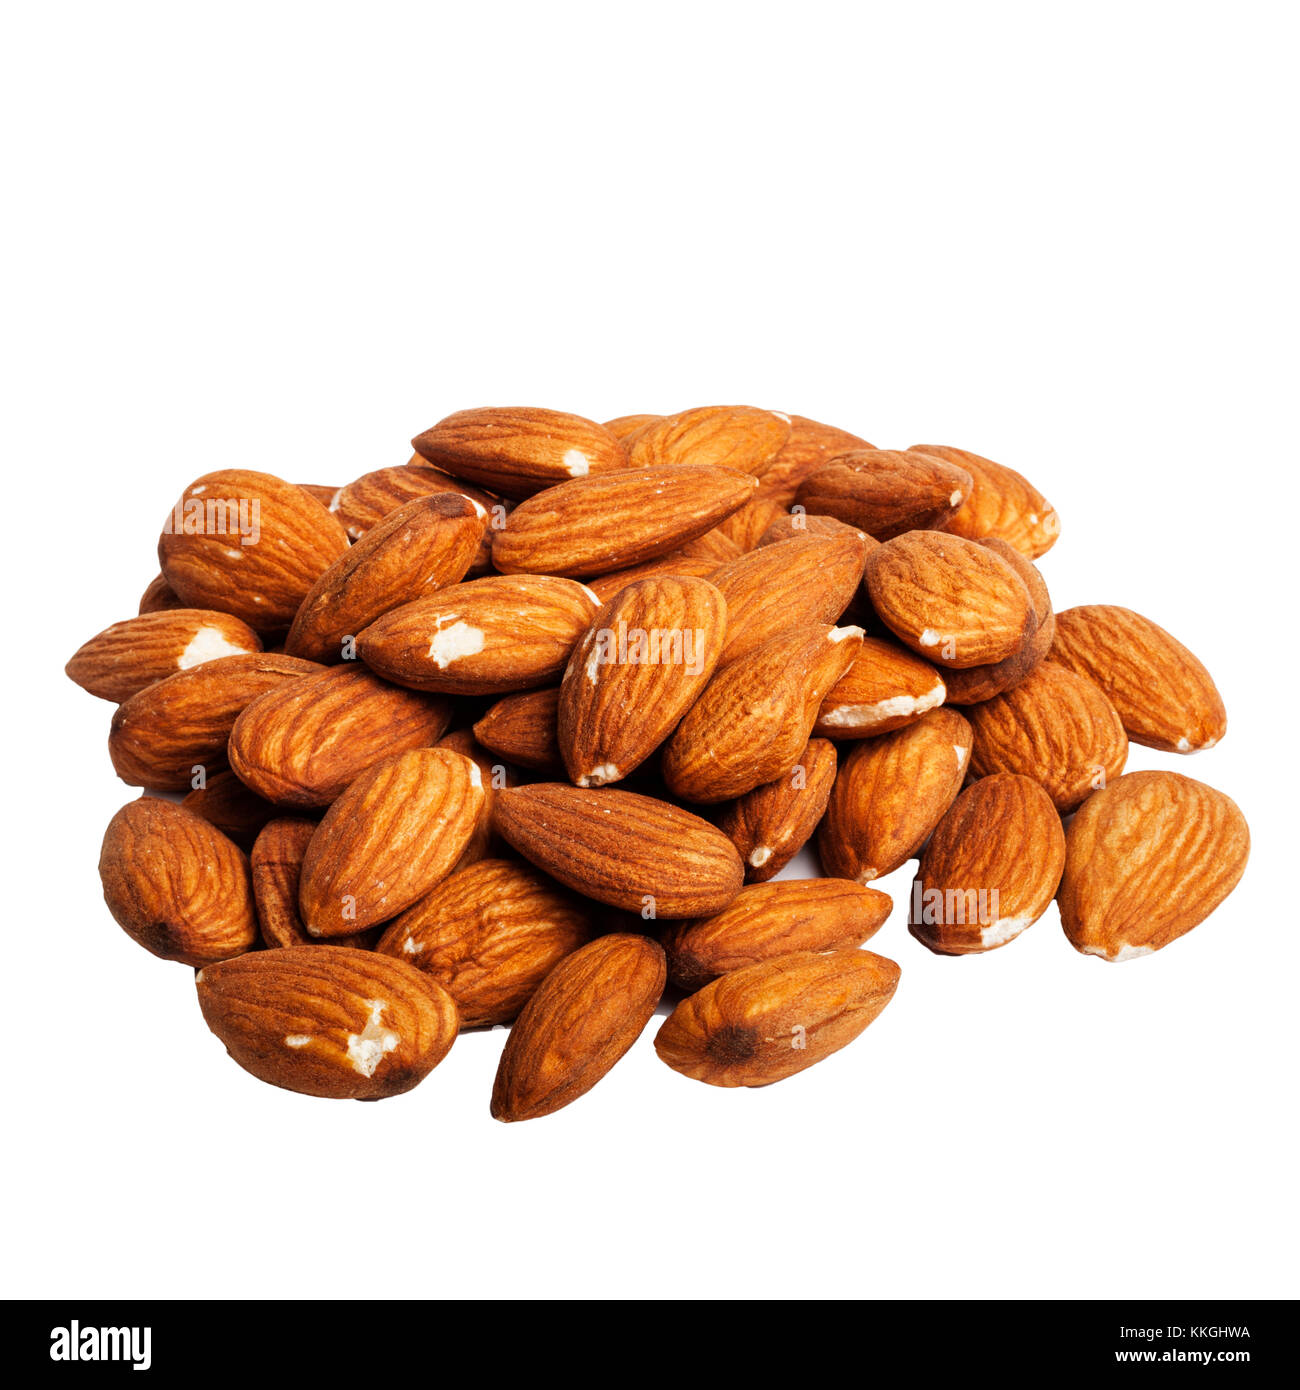 Whole almonds on a white background Stock Photo